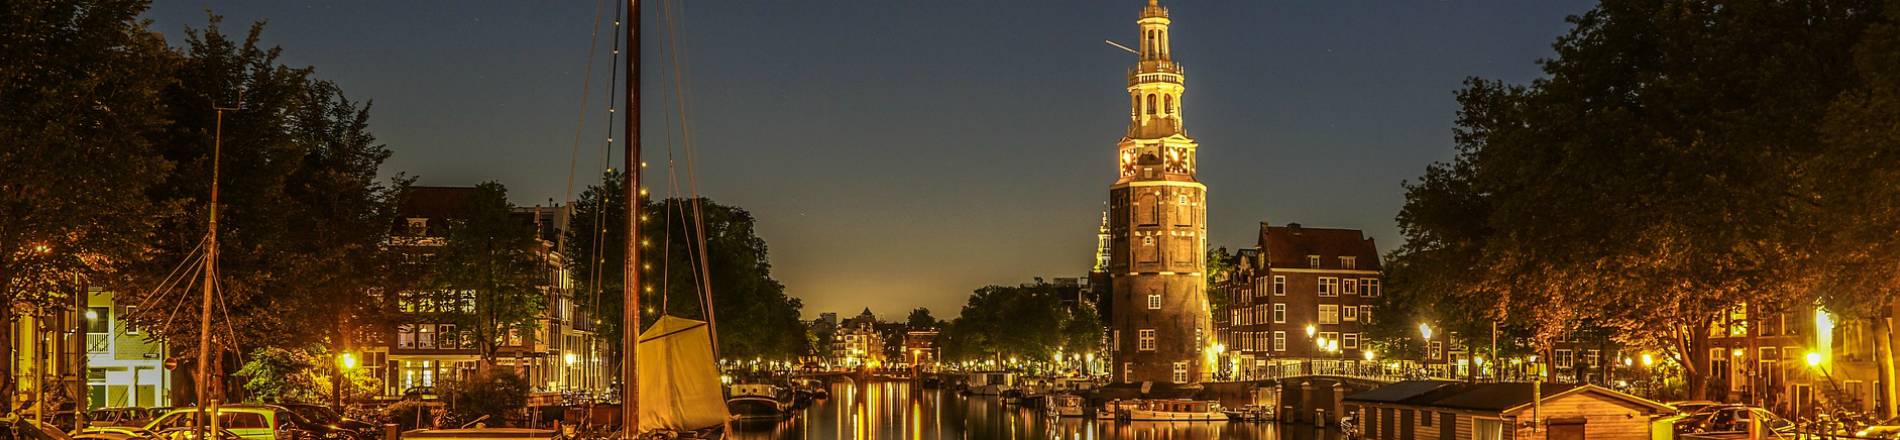 Amsterdam i izlet u Giethoorn 5 dana